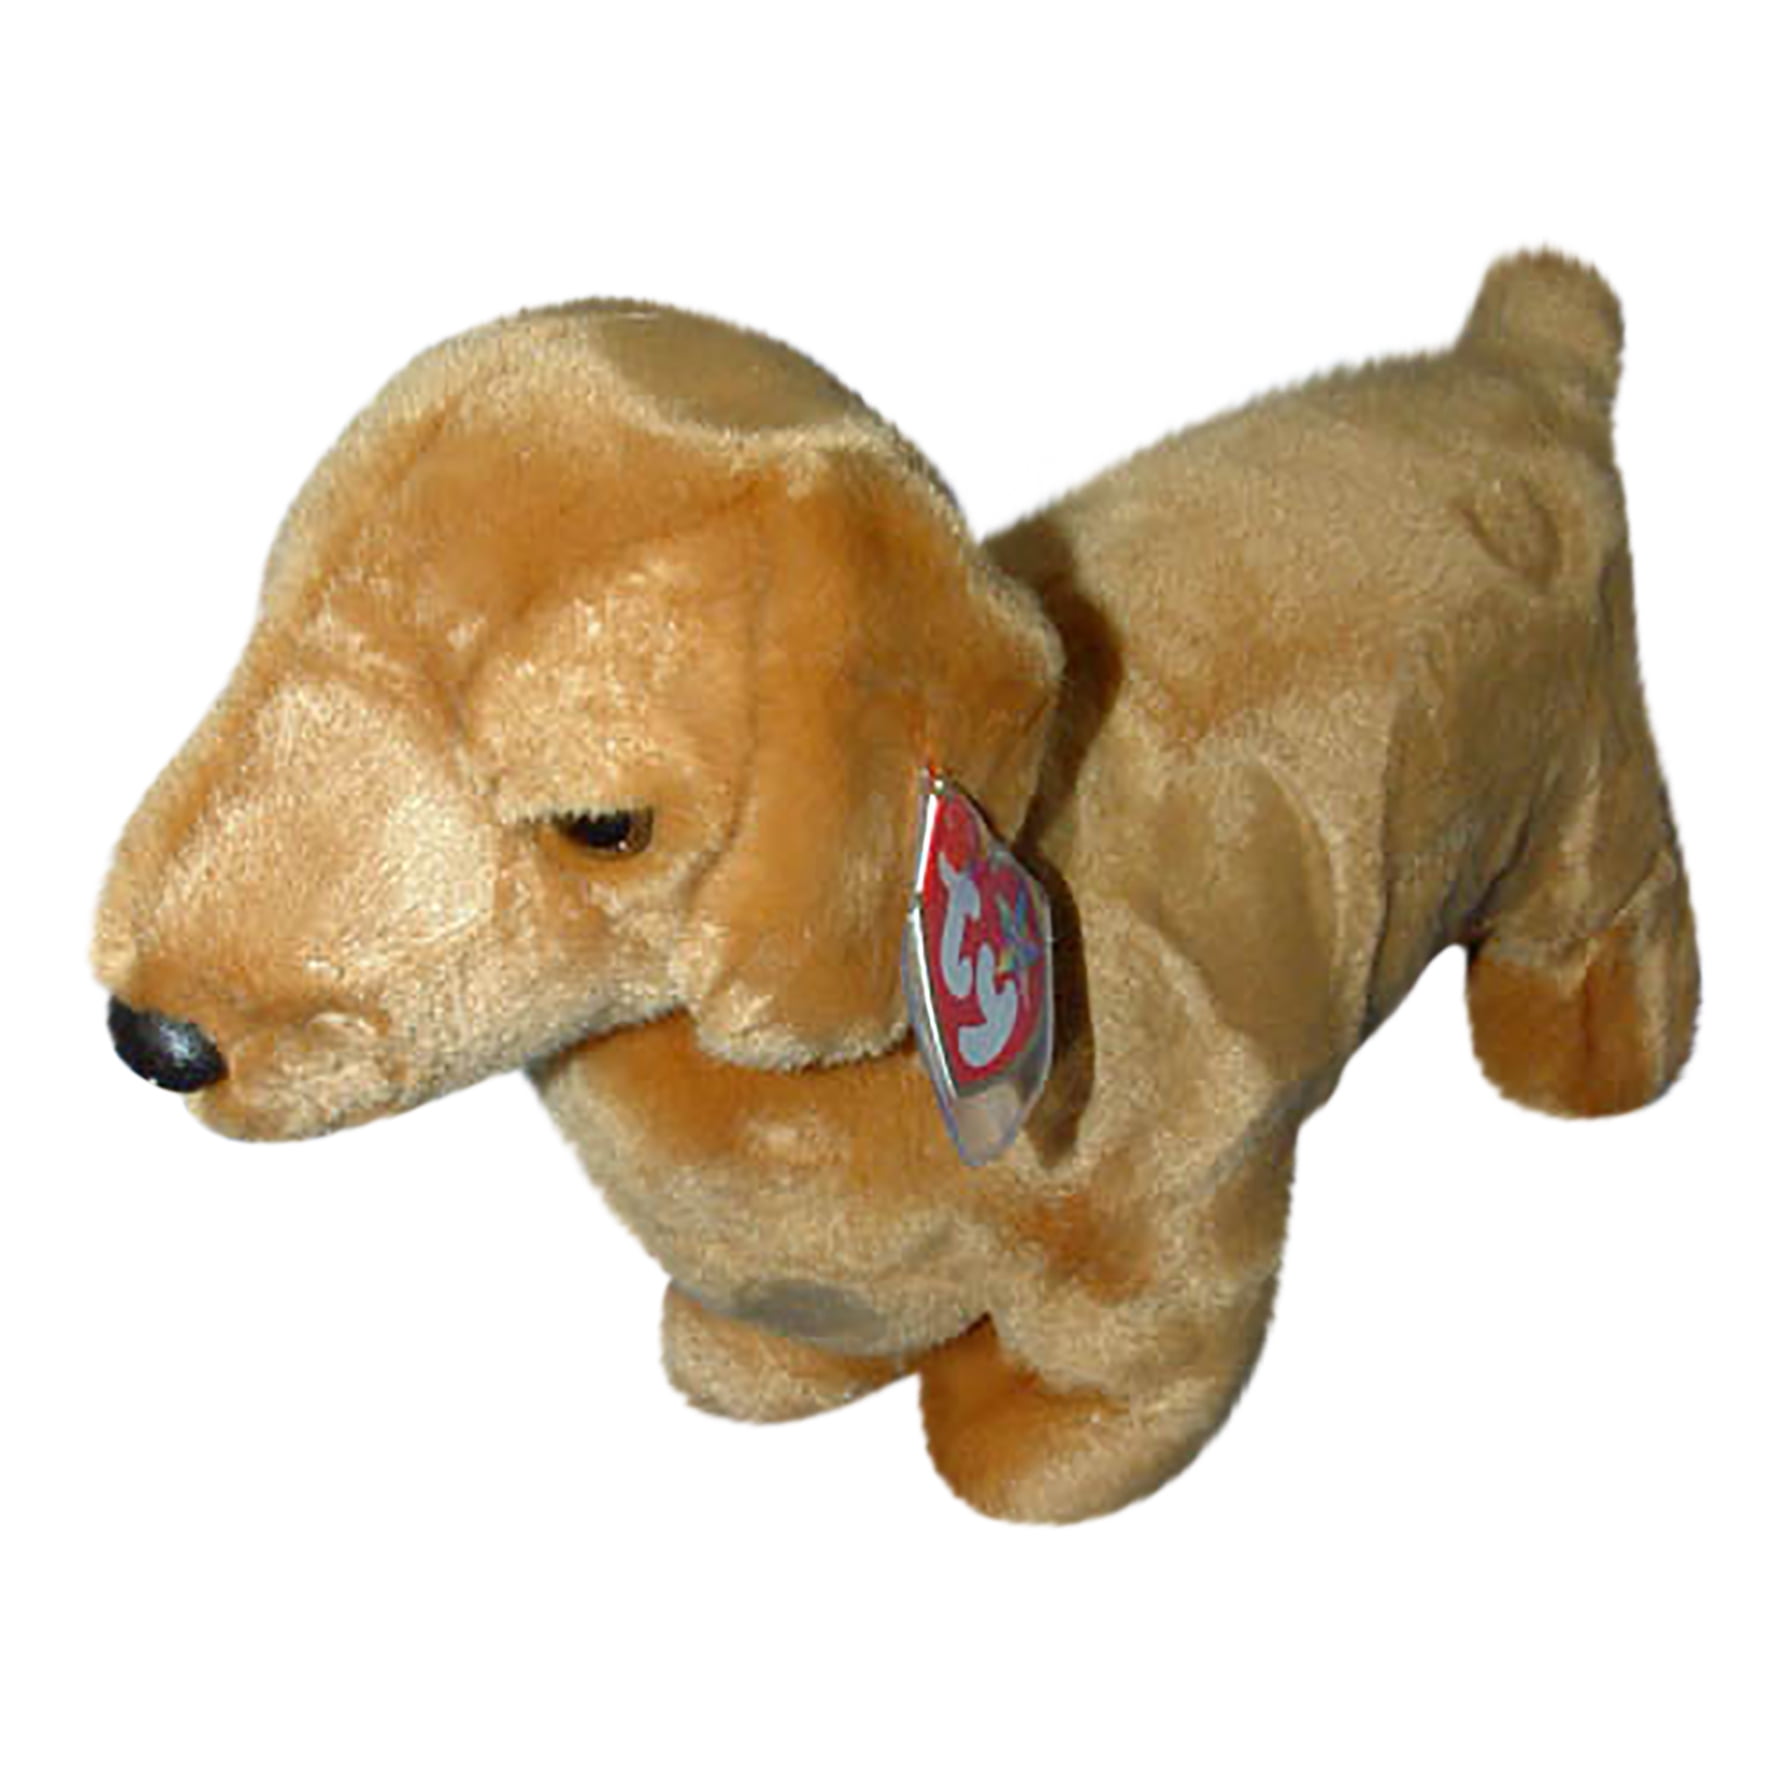 Ty Beanie Baby Farley White Terrier Dog MWMT Plush Animal Toy 2006 Retired for sale online 